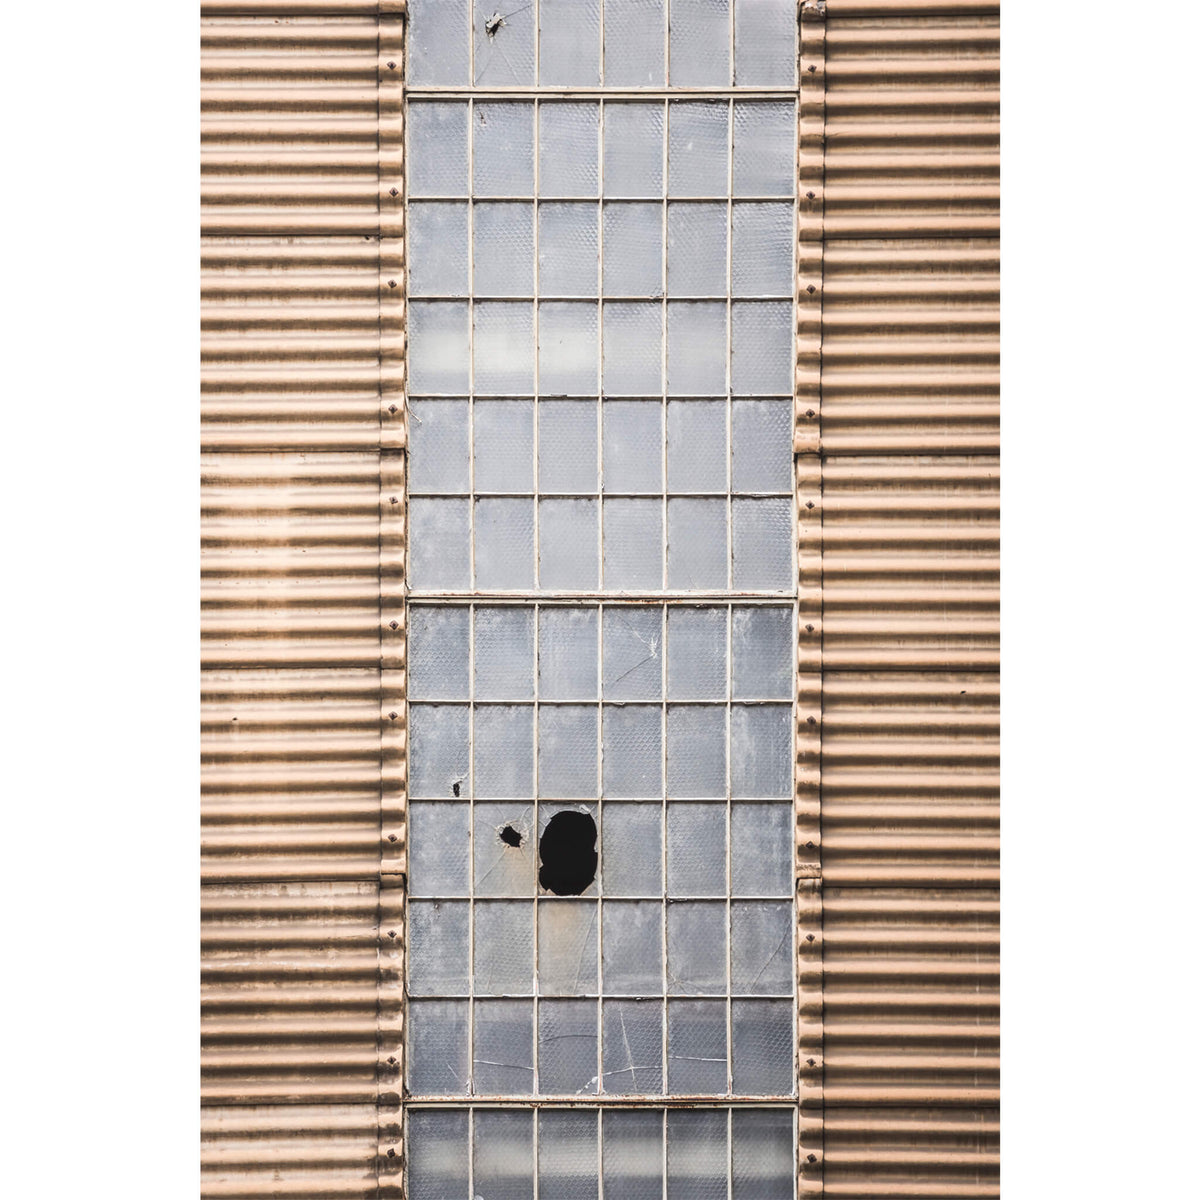 Power Station Window | Morwell Power Station